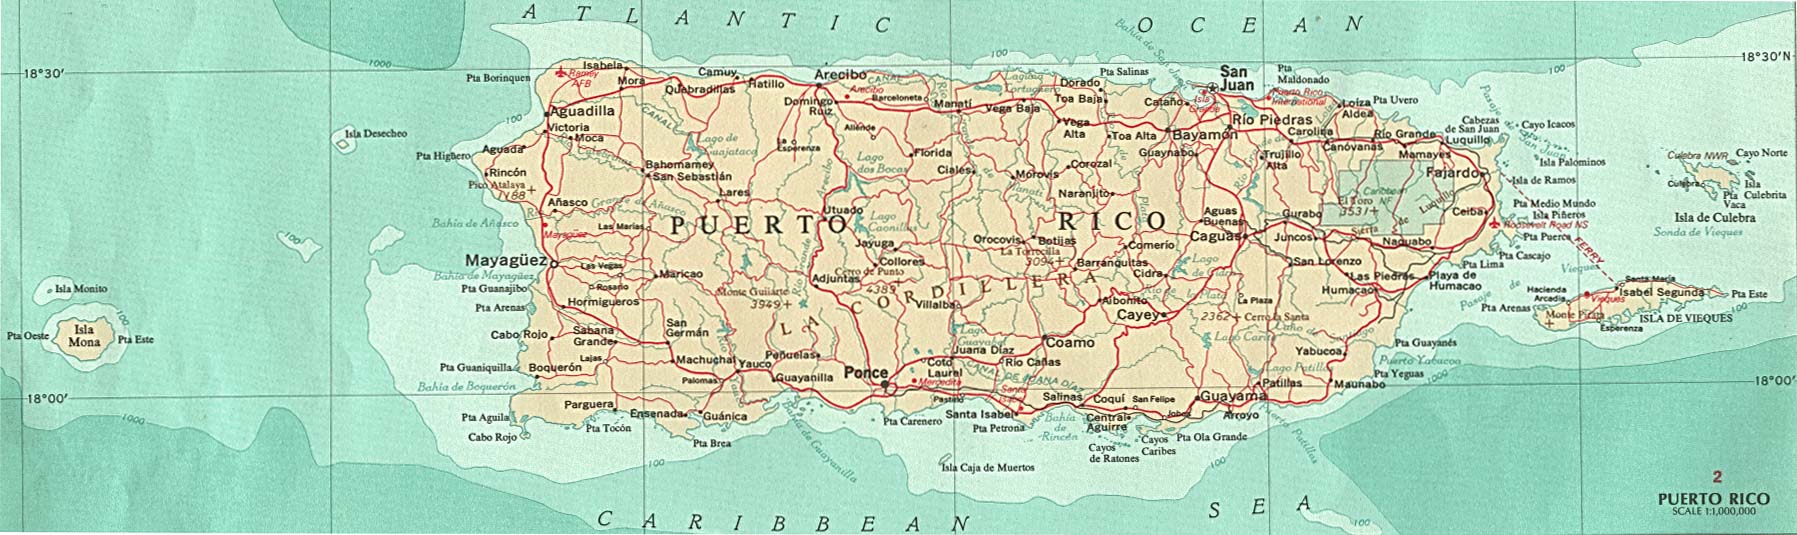 Puerto Rico karte 1970